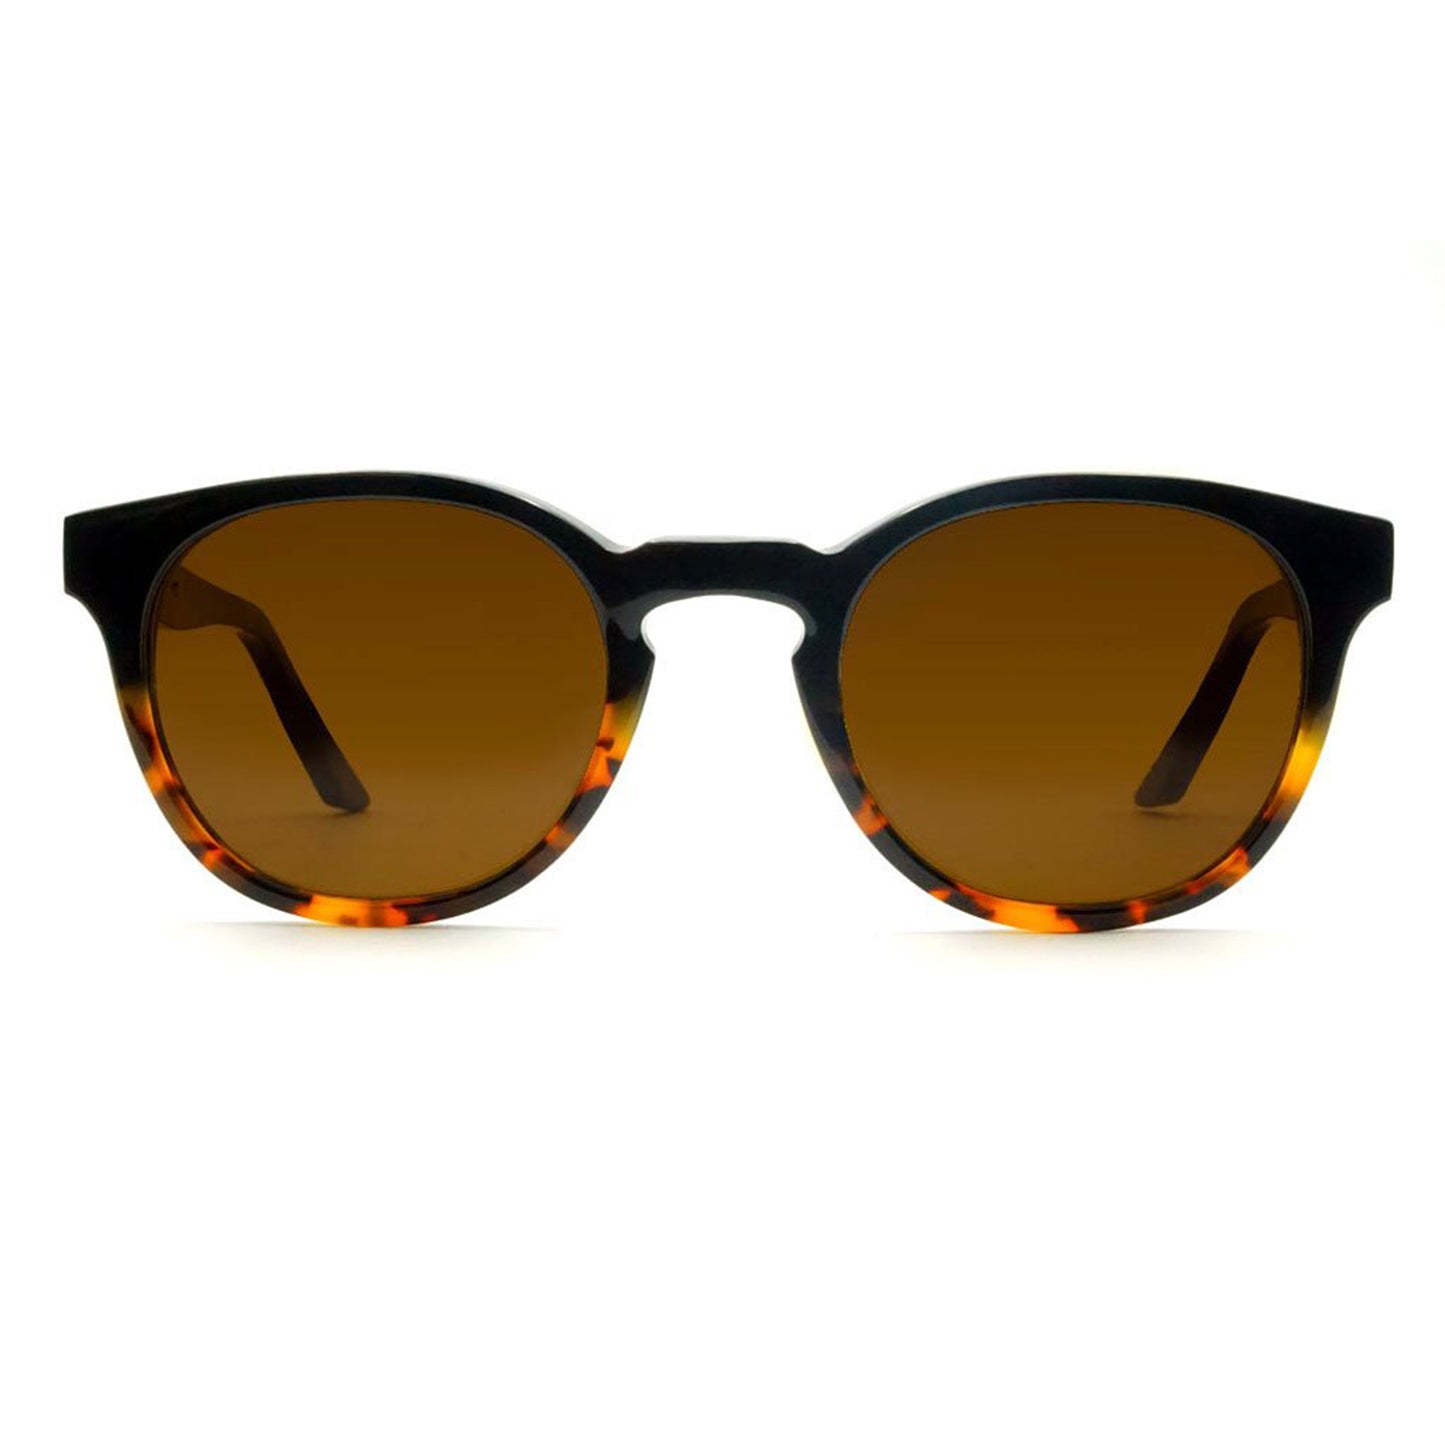 Lowercase Marlton Sunglasses in Black Amber